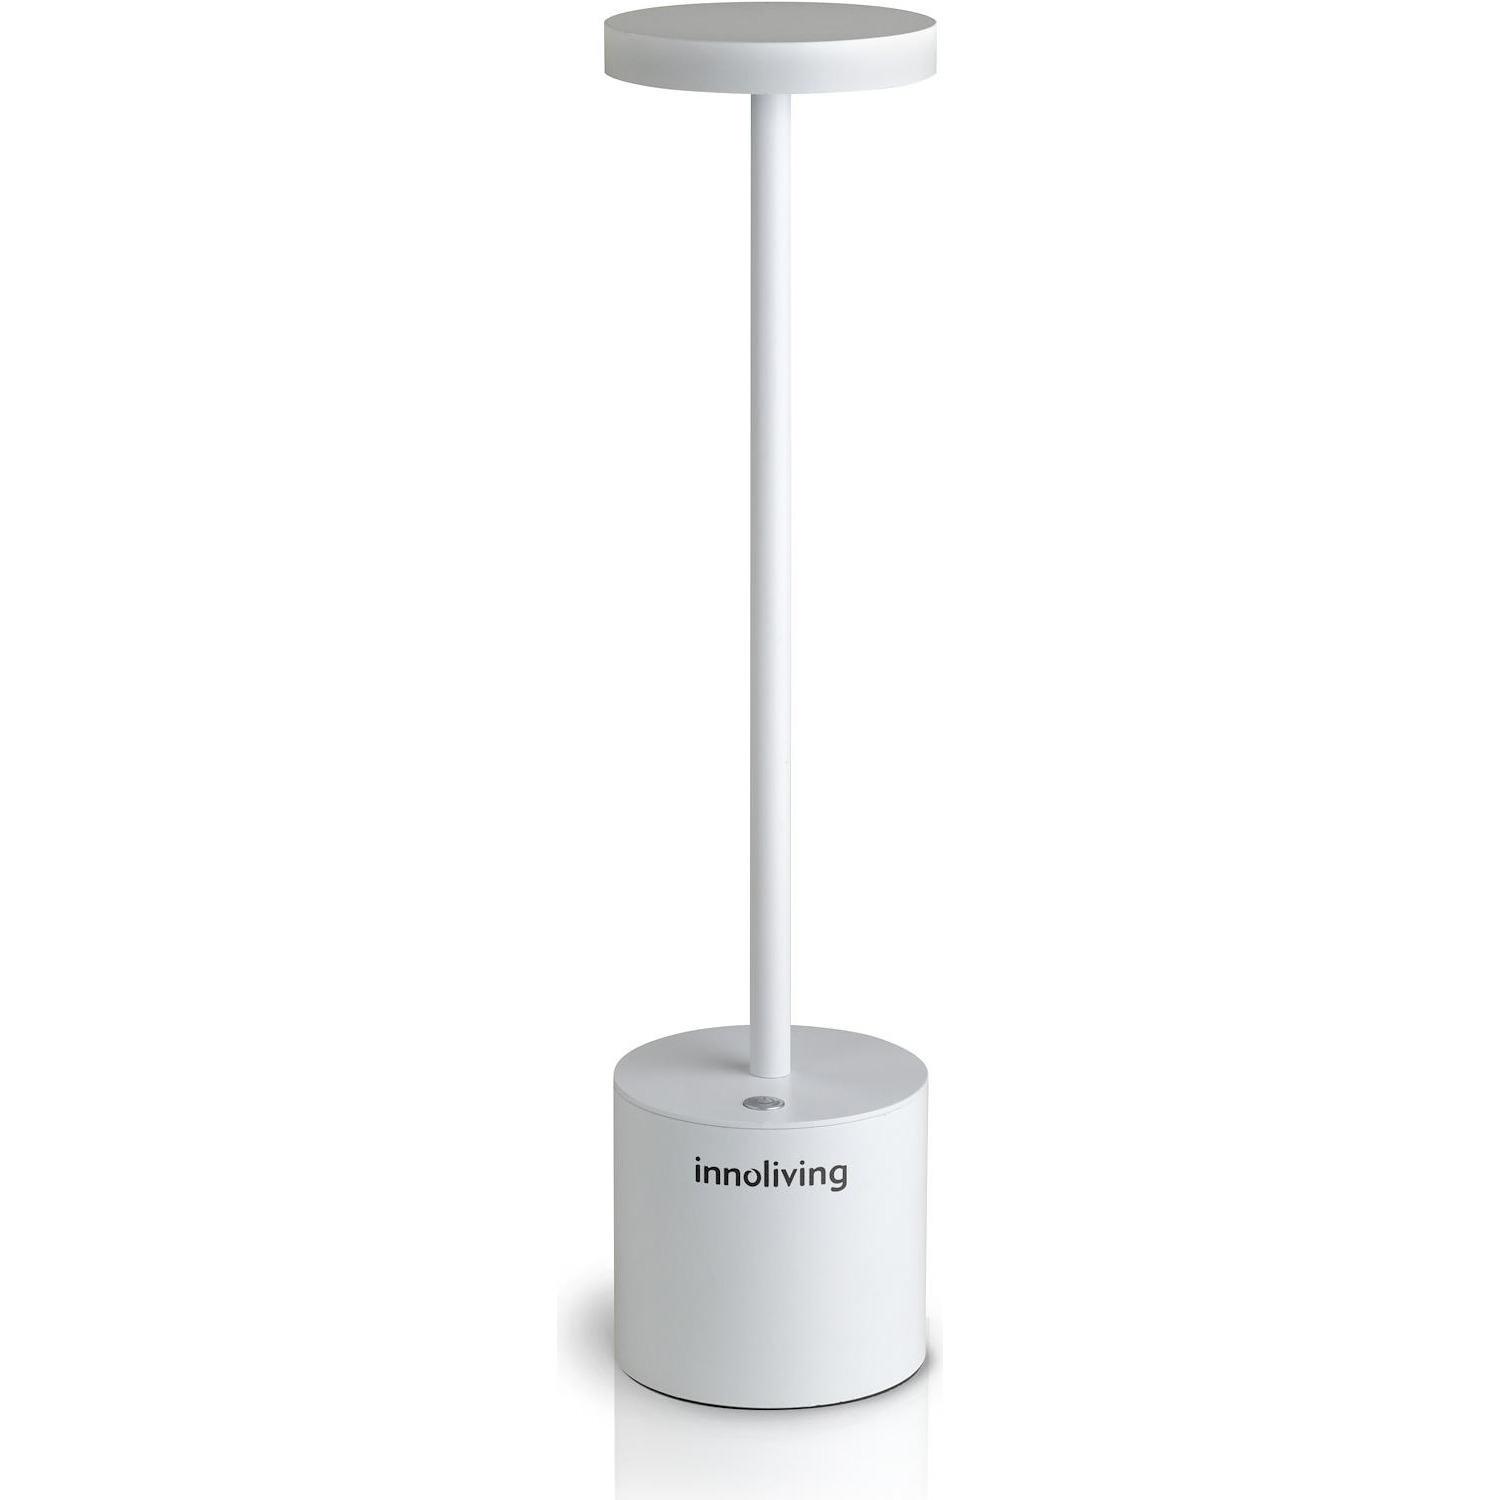 Immagine per Lampada LED da tavolo ricaricabile Innoliving INN-094W white bianco da DIMOStore